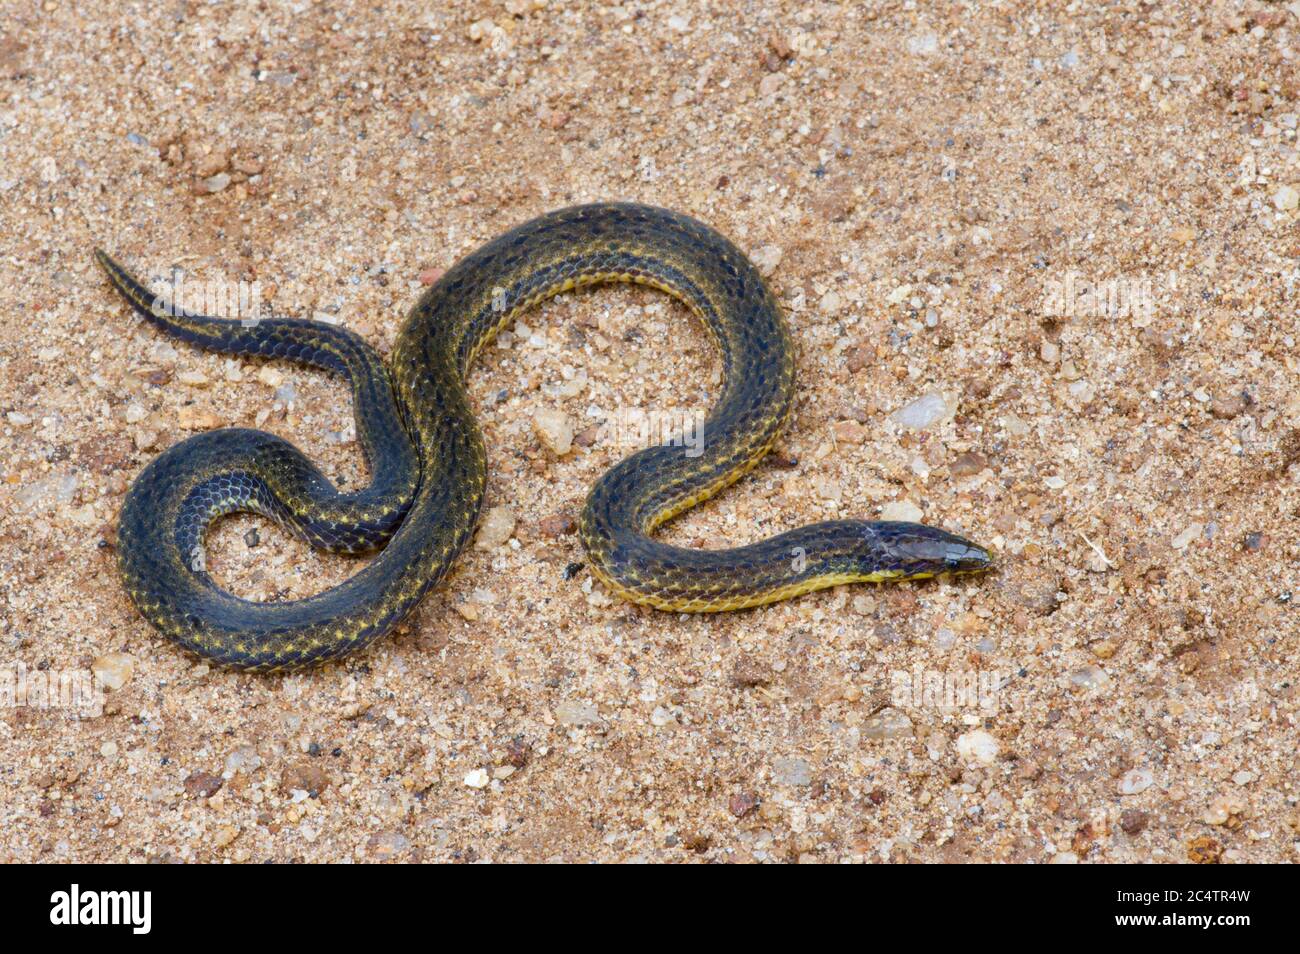 A De Silva's Rough-sided Snake (Aspidura desilvai) from Knuckles Forest Reserve, Sri Lanka Stock Photo